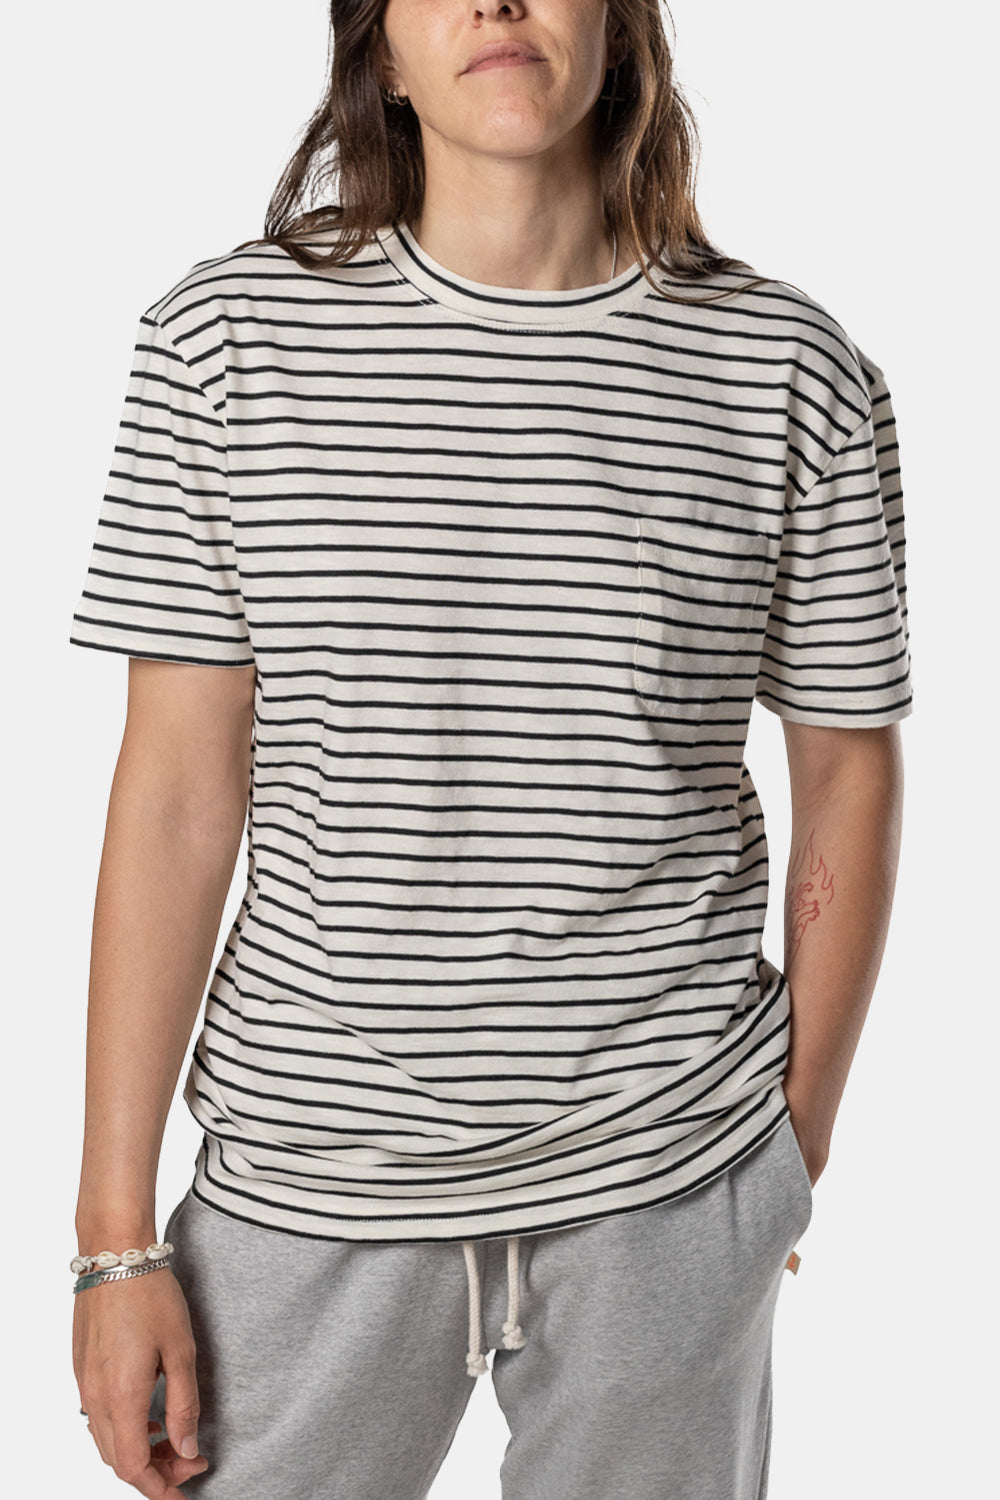 La Paz Guerreiro T-Shirt (Black Stripes)